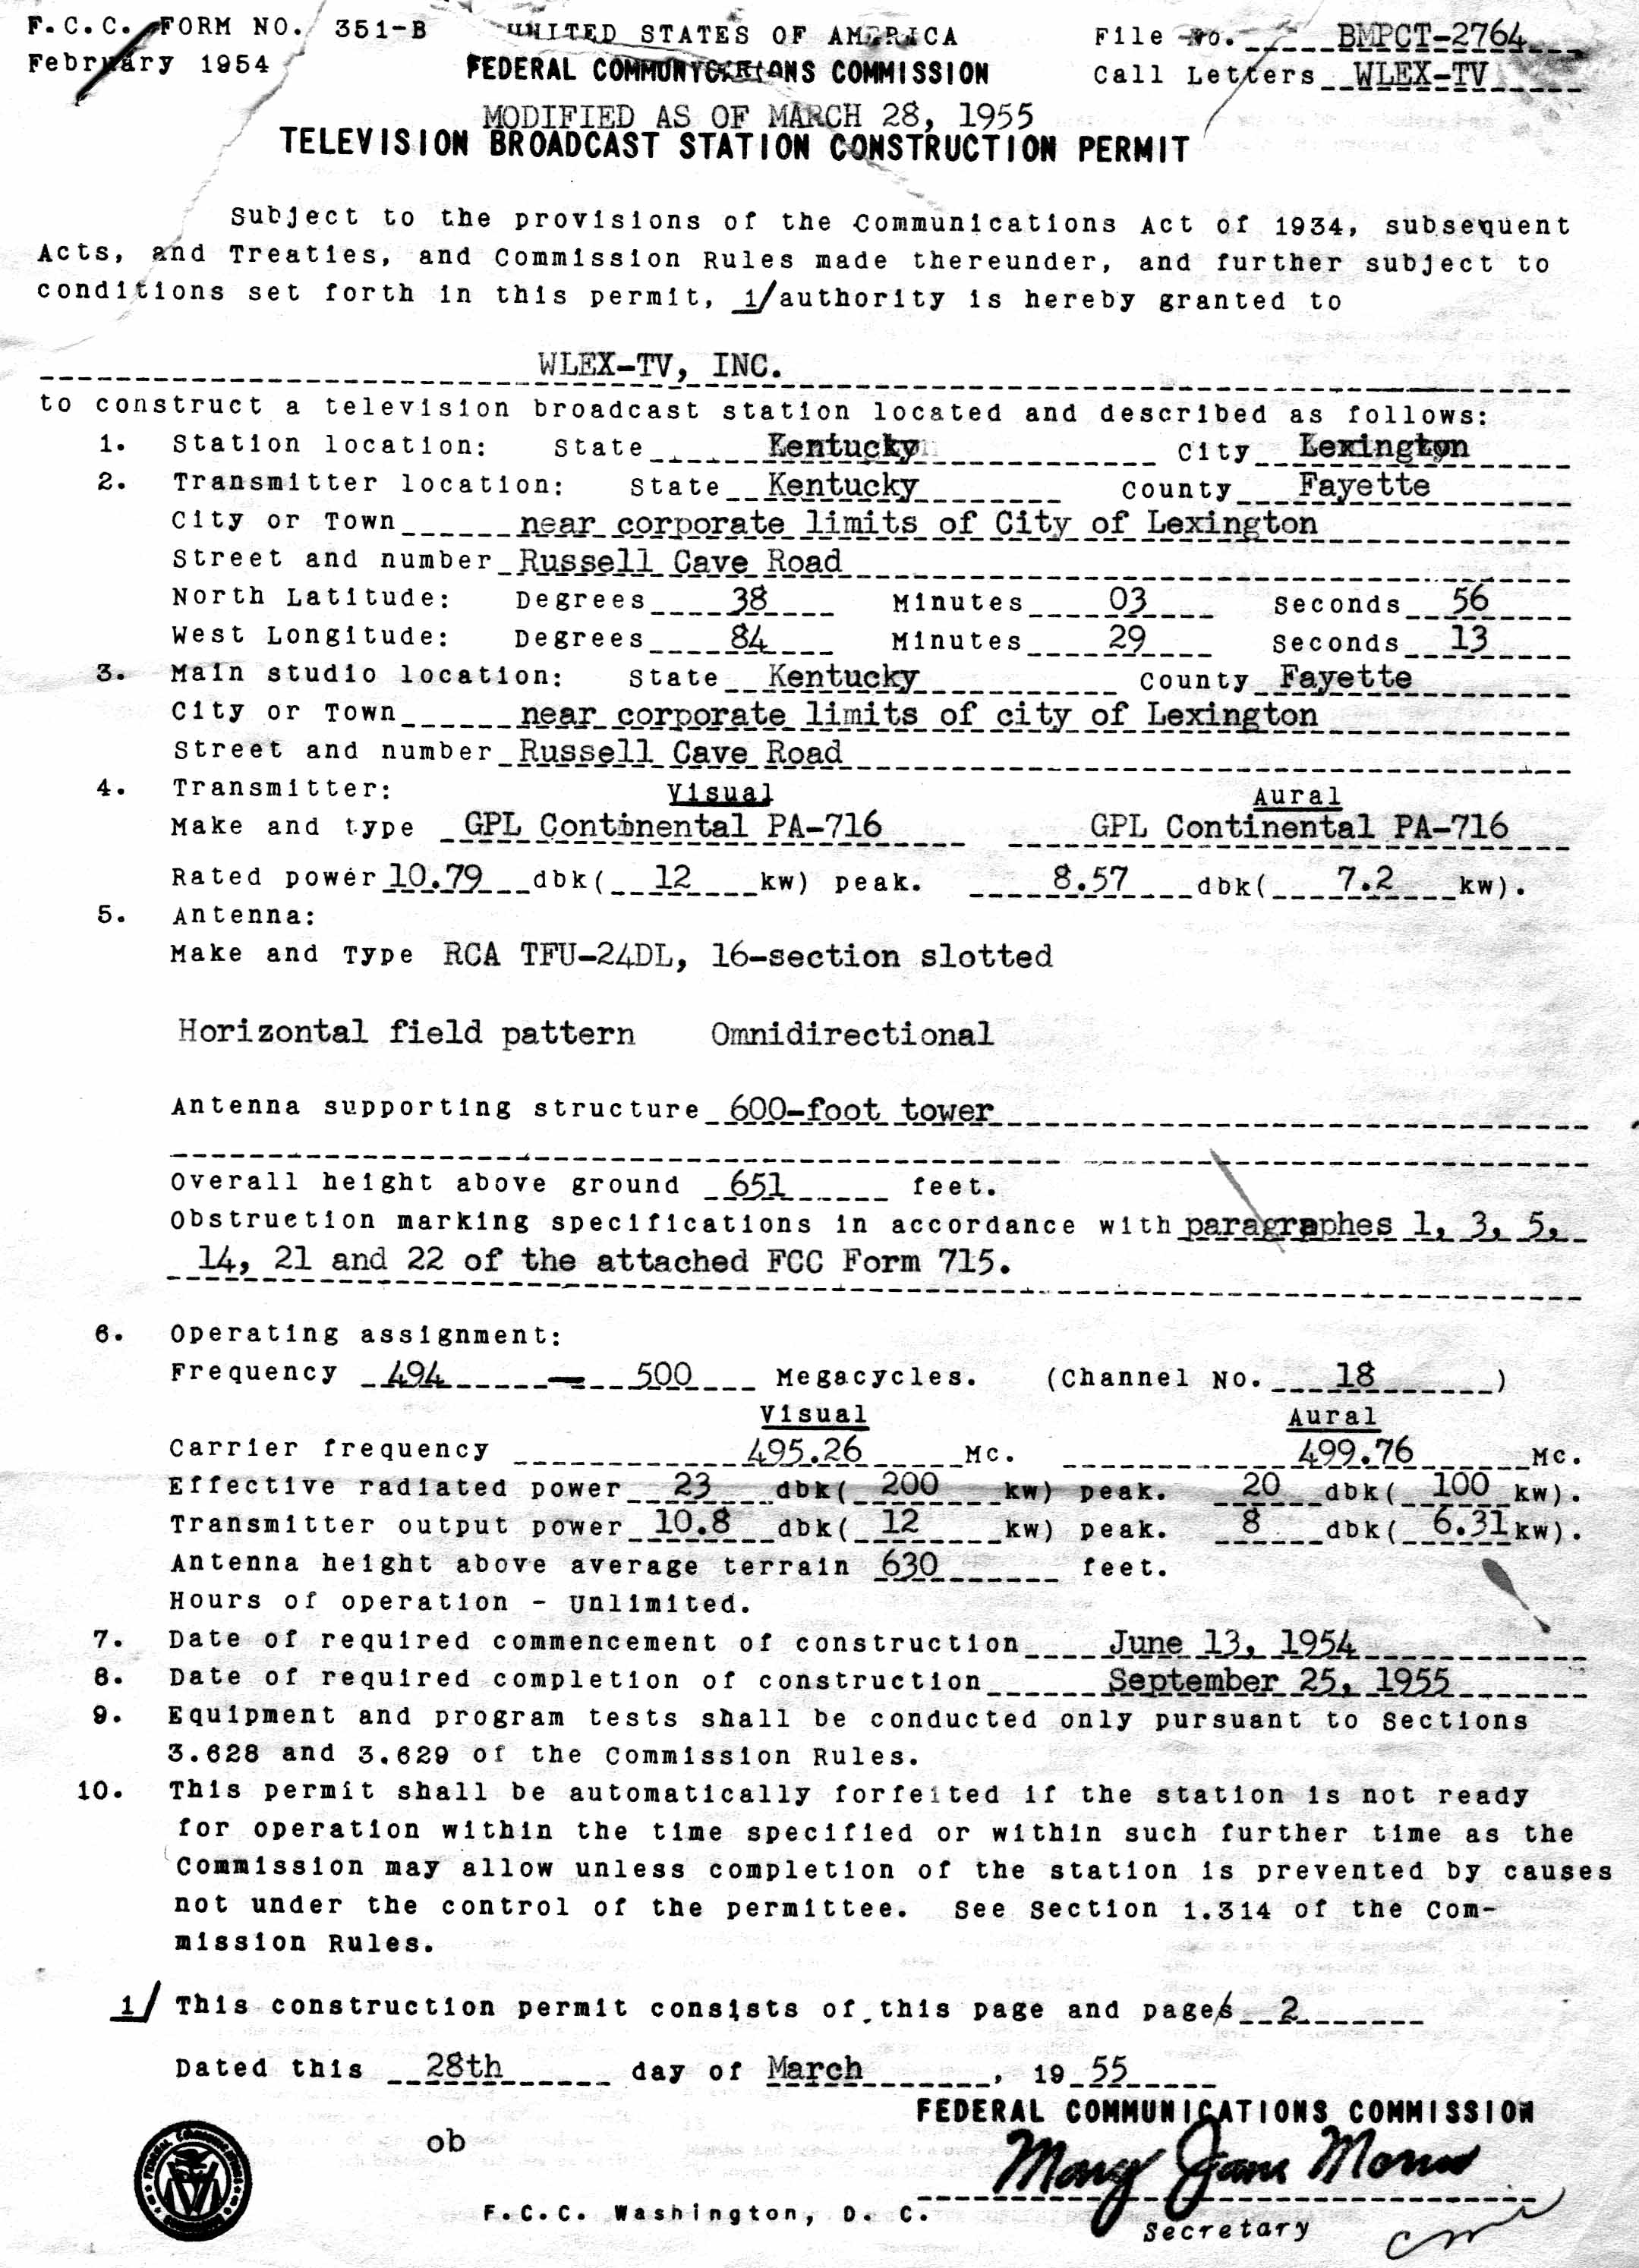 1955 Construction Permit